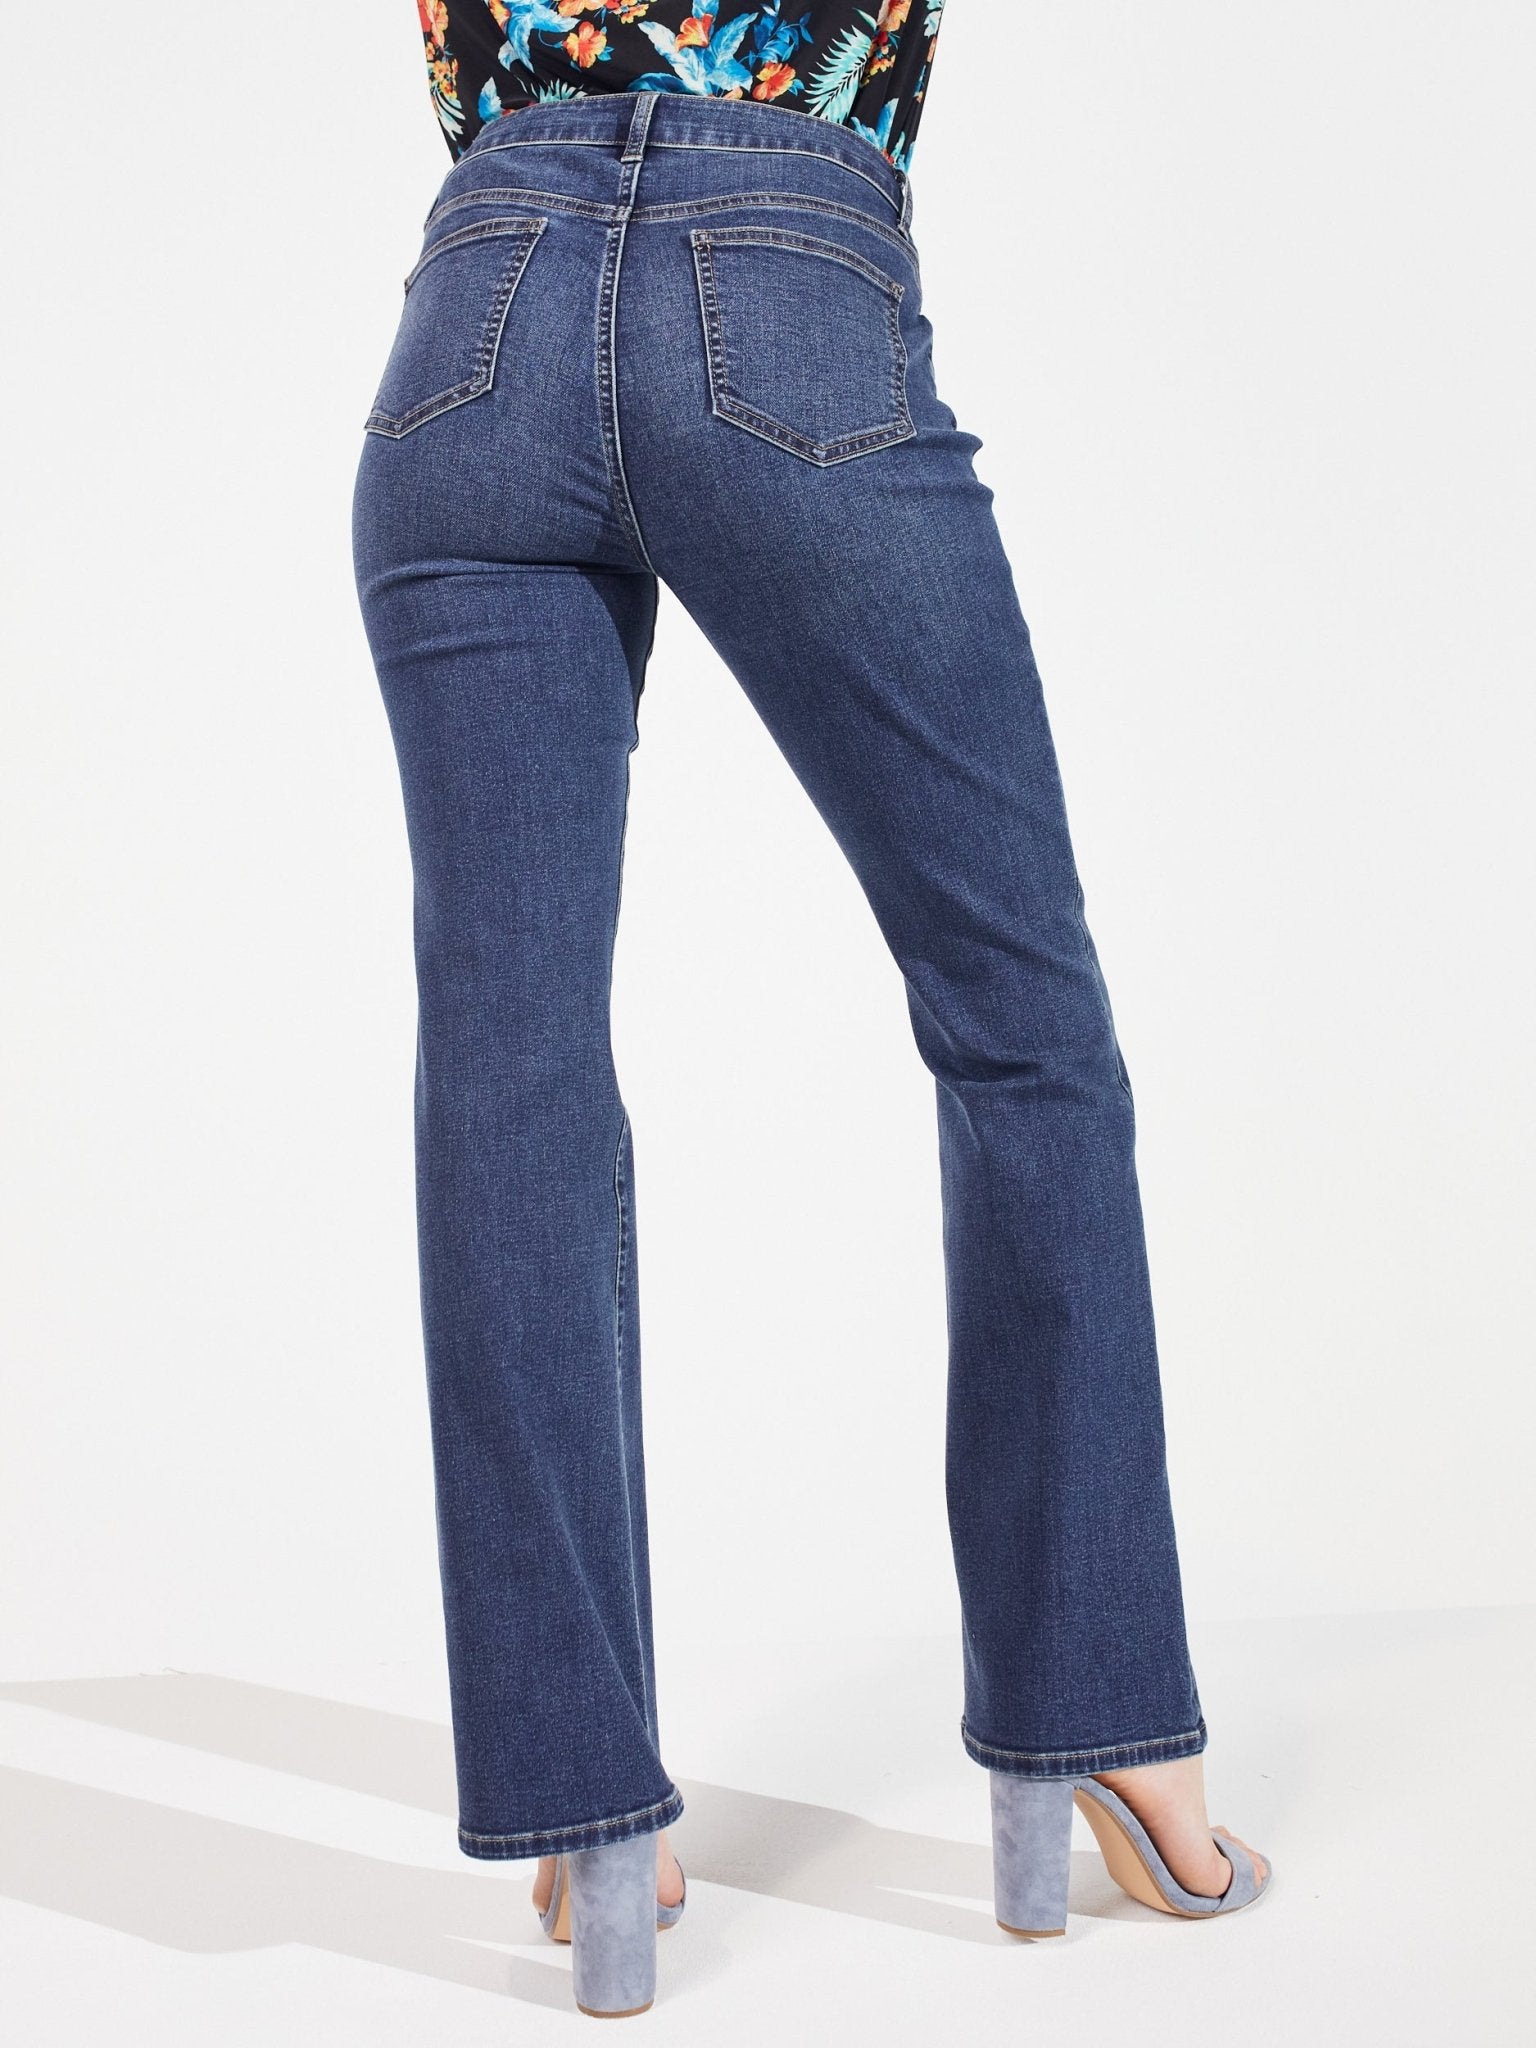 Kuul Blue Jeans Pants Eleven 11 Womens Denim Stretch 25 Waist X